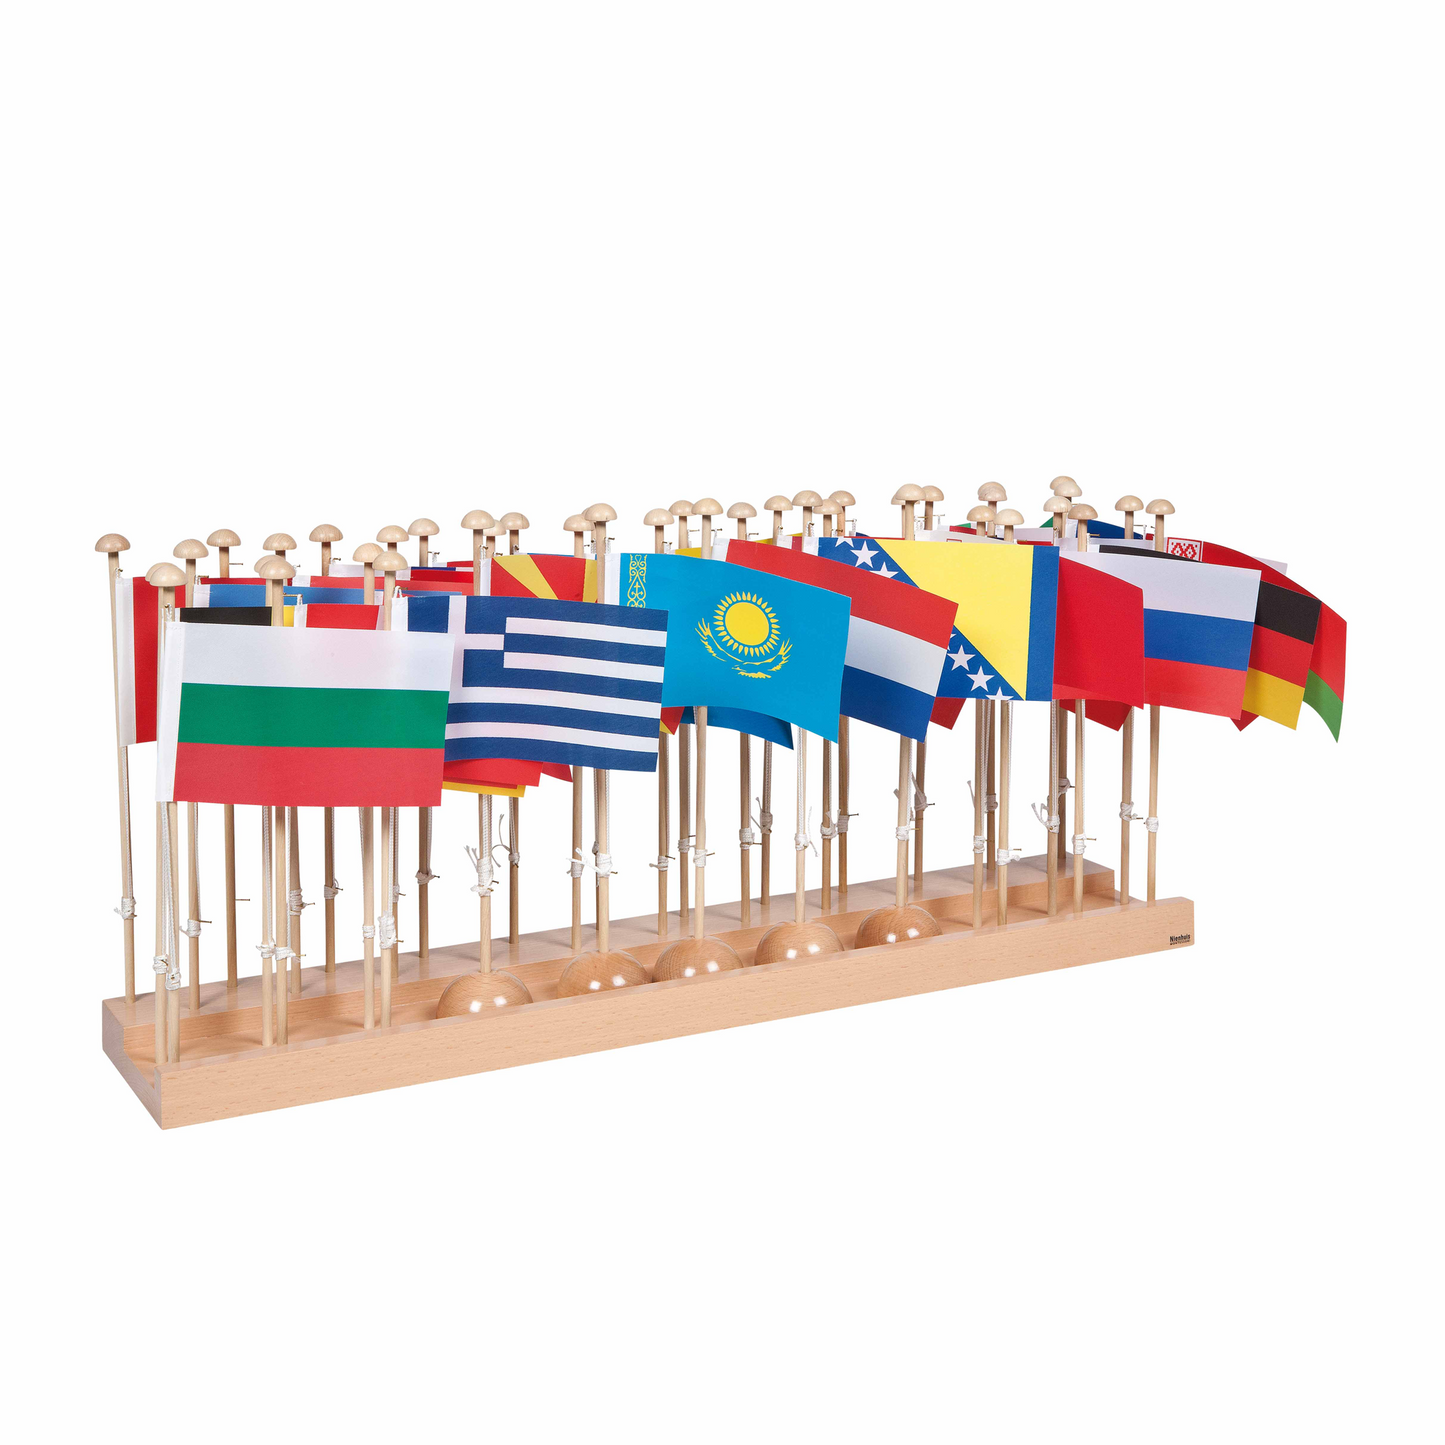 Display of the flags of Europe - Nienhuis AMI